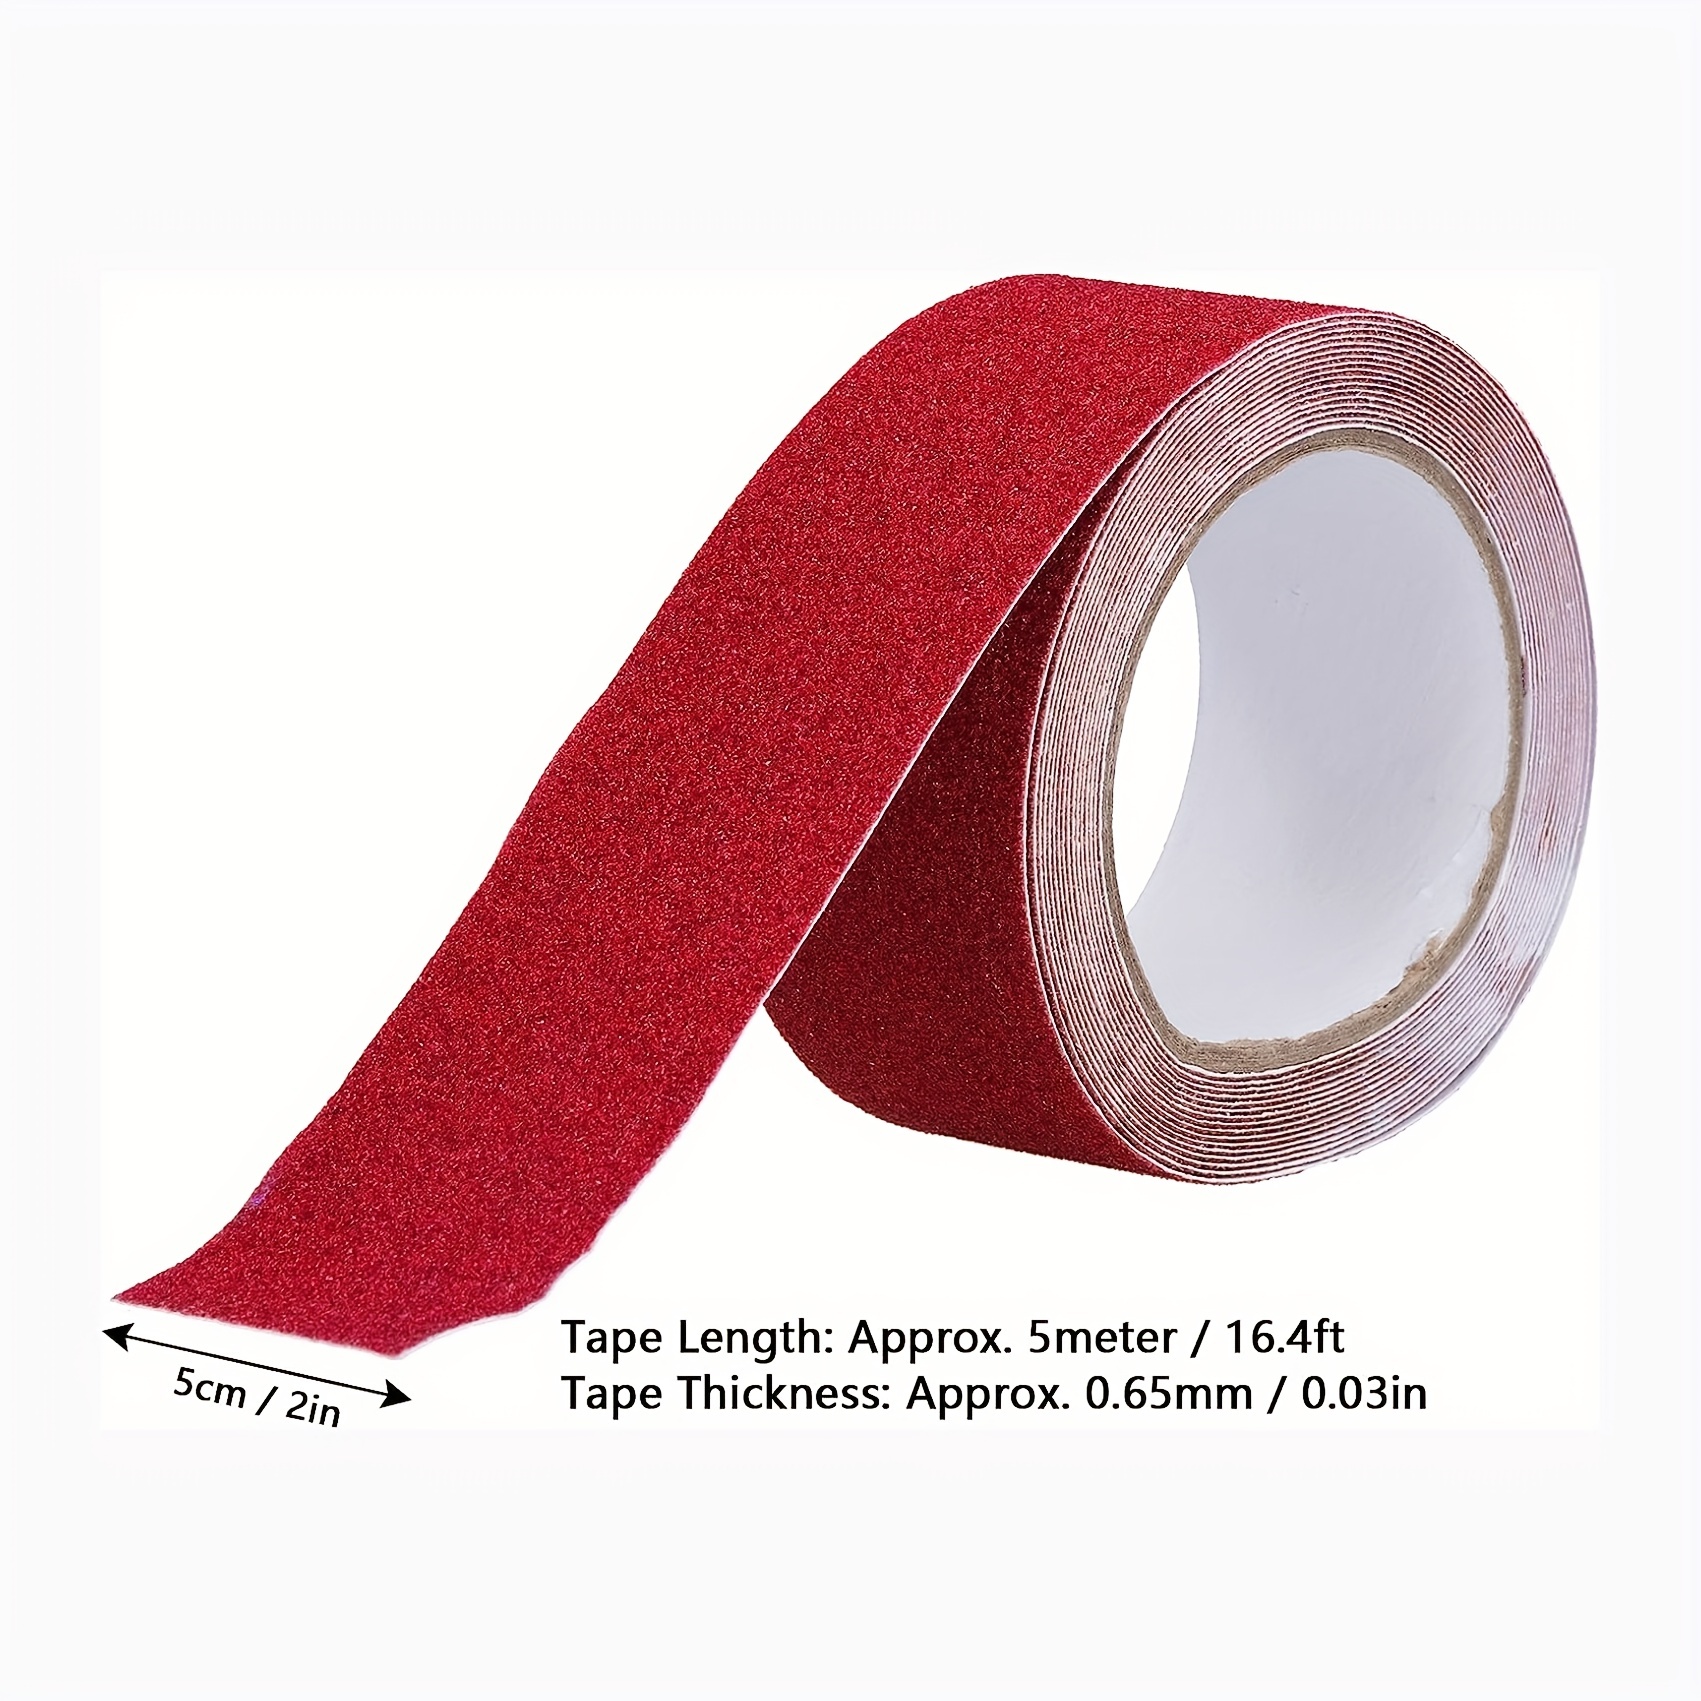 Cushion-Grip Non-Abrasive Anti-Slip Tape